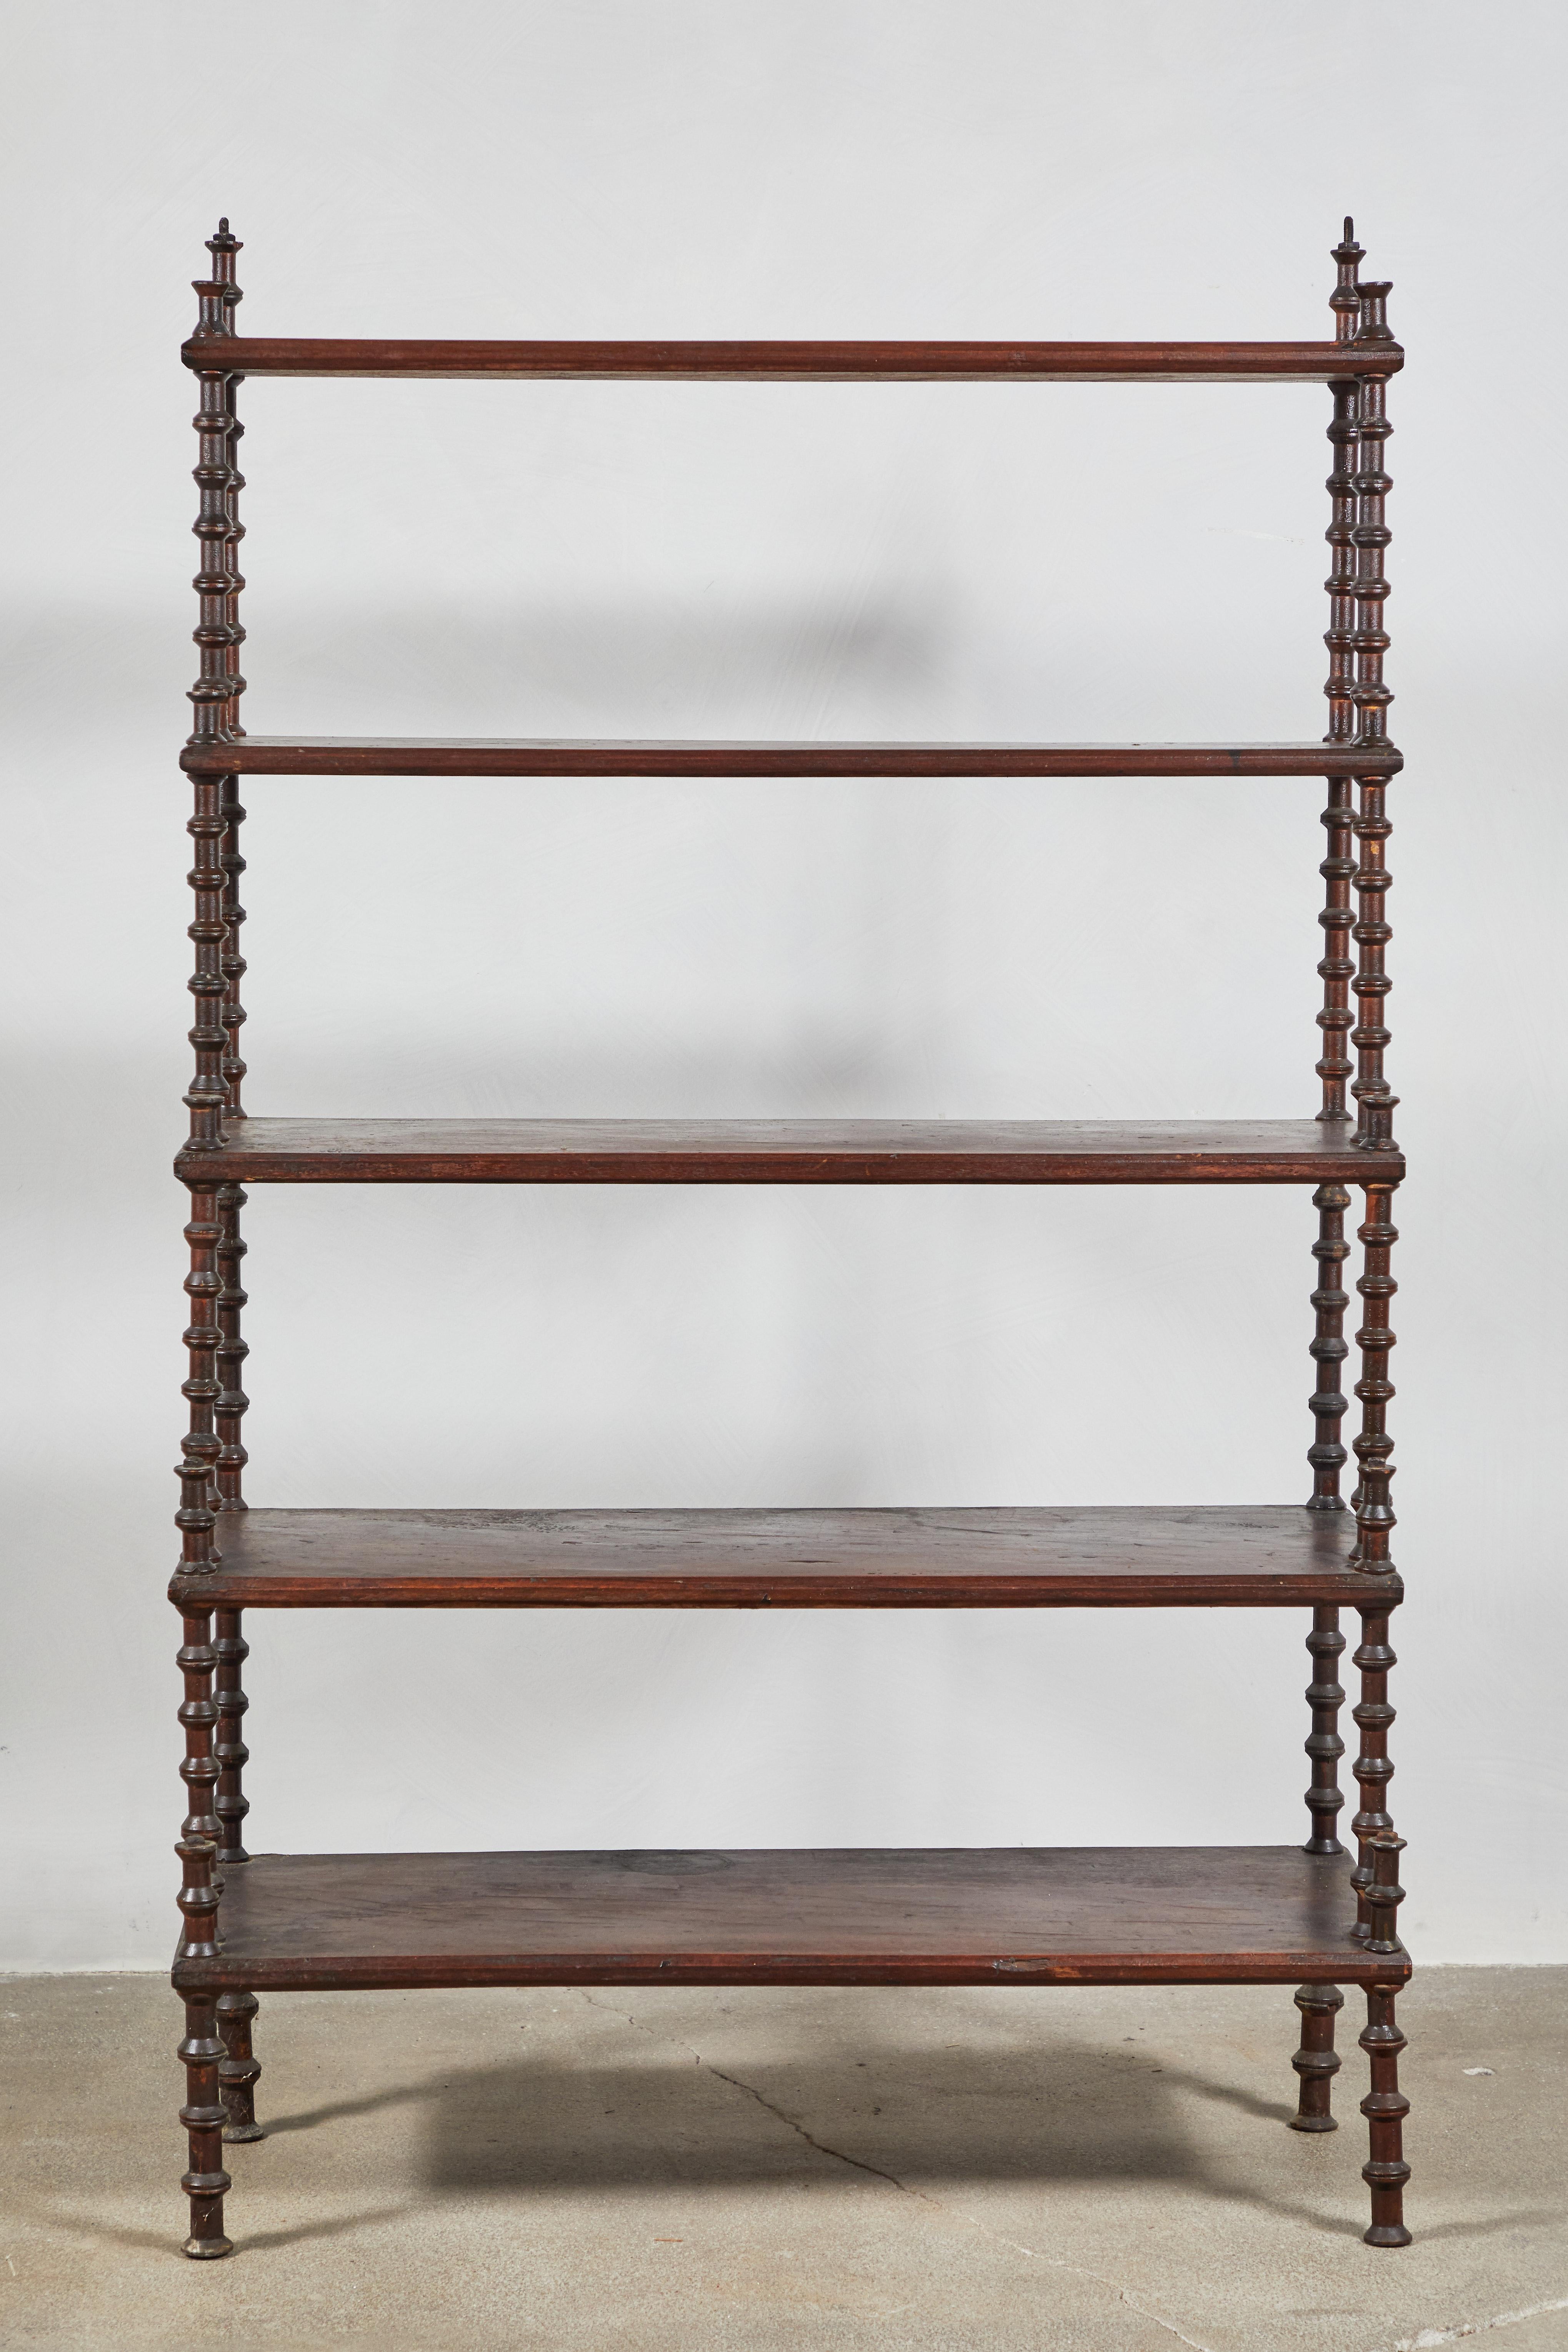 Early American five-tiered step spool shelf. The shelf offers a Folk Art charm.